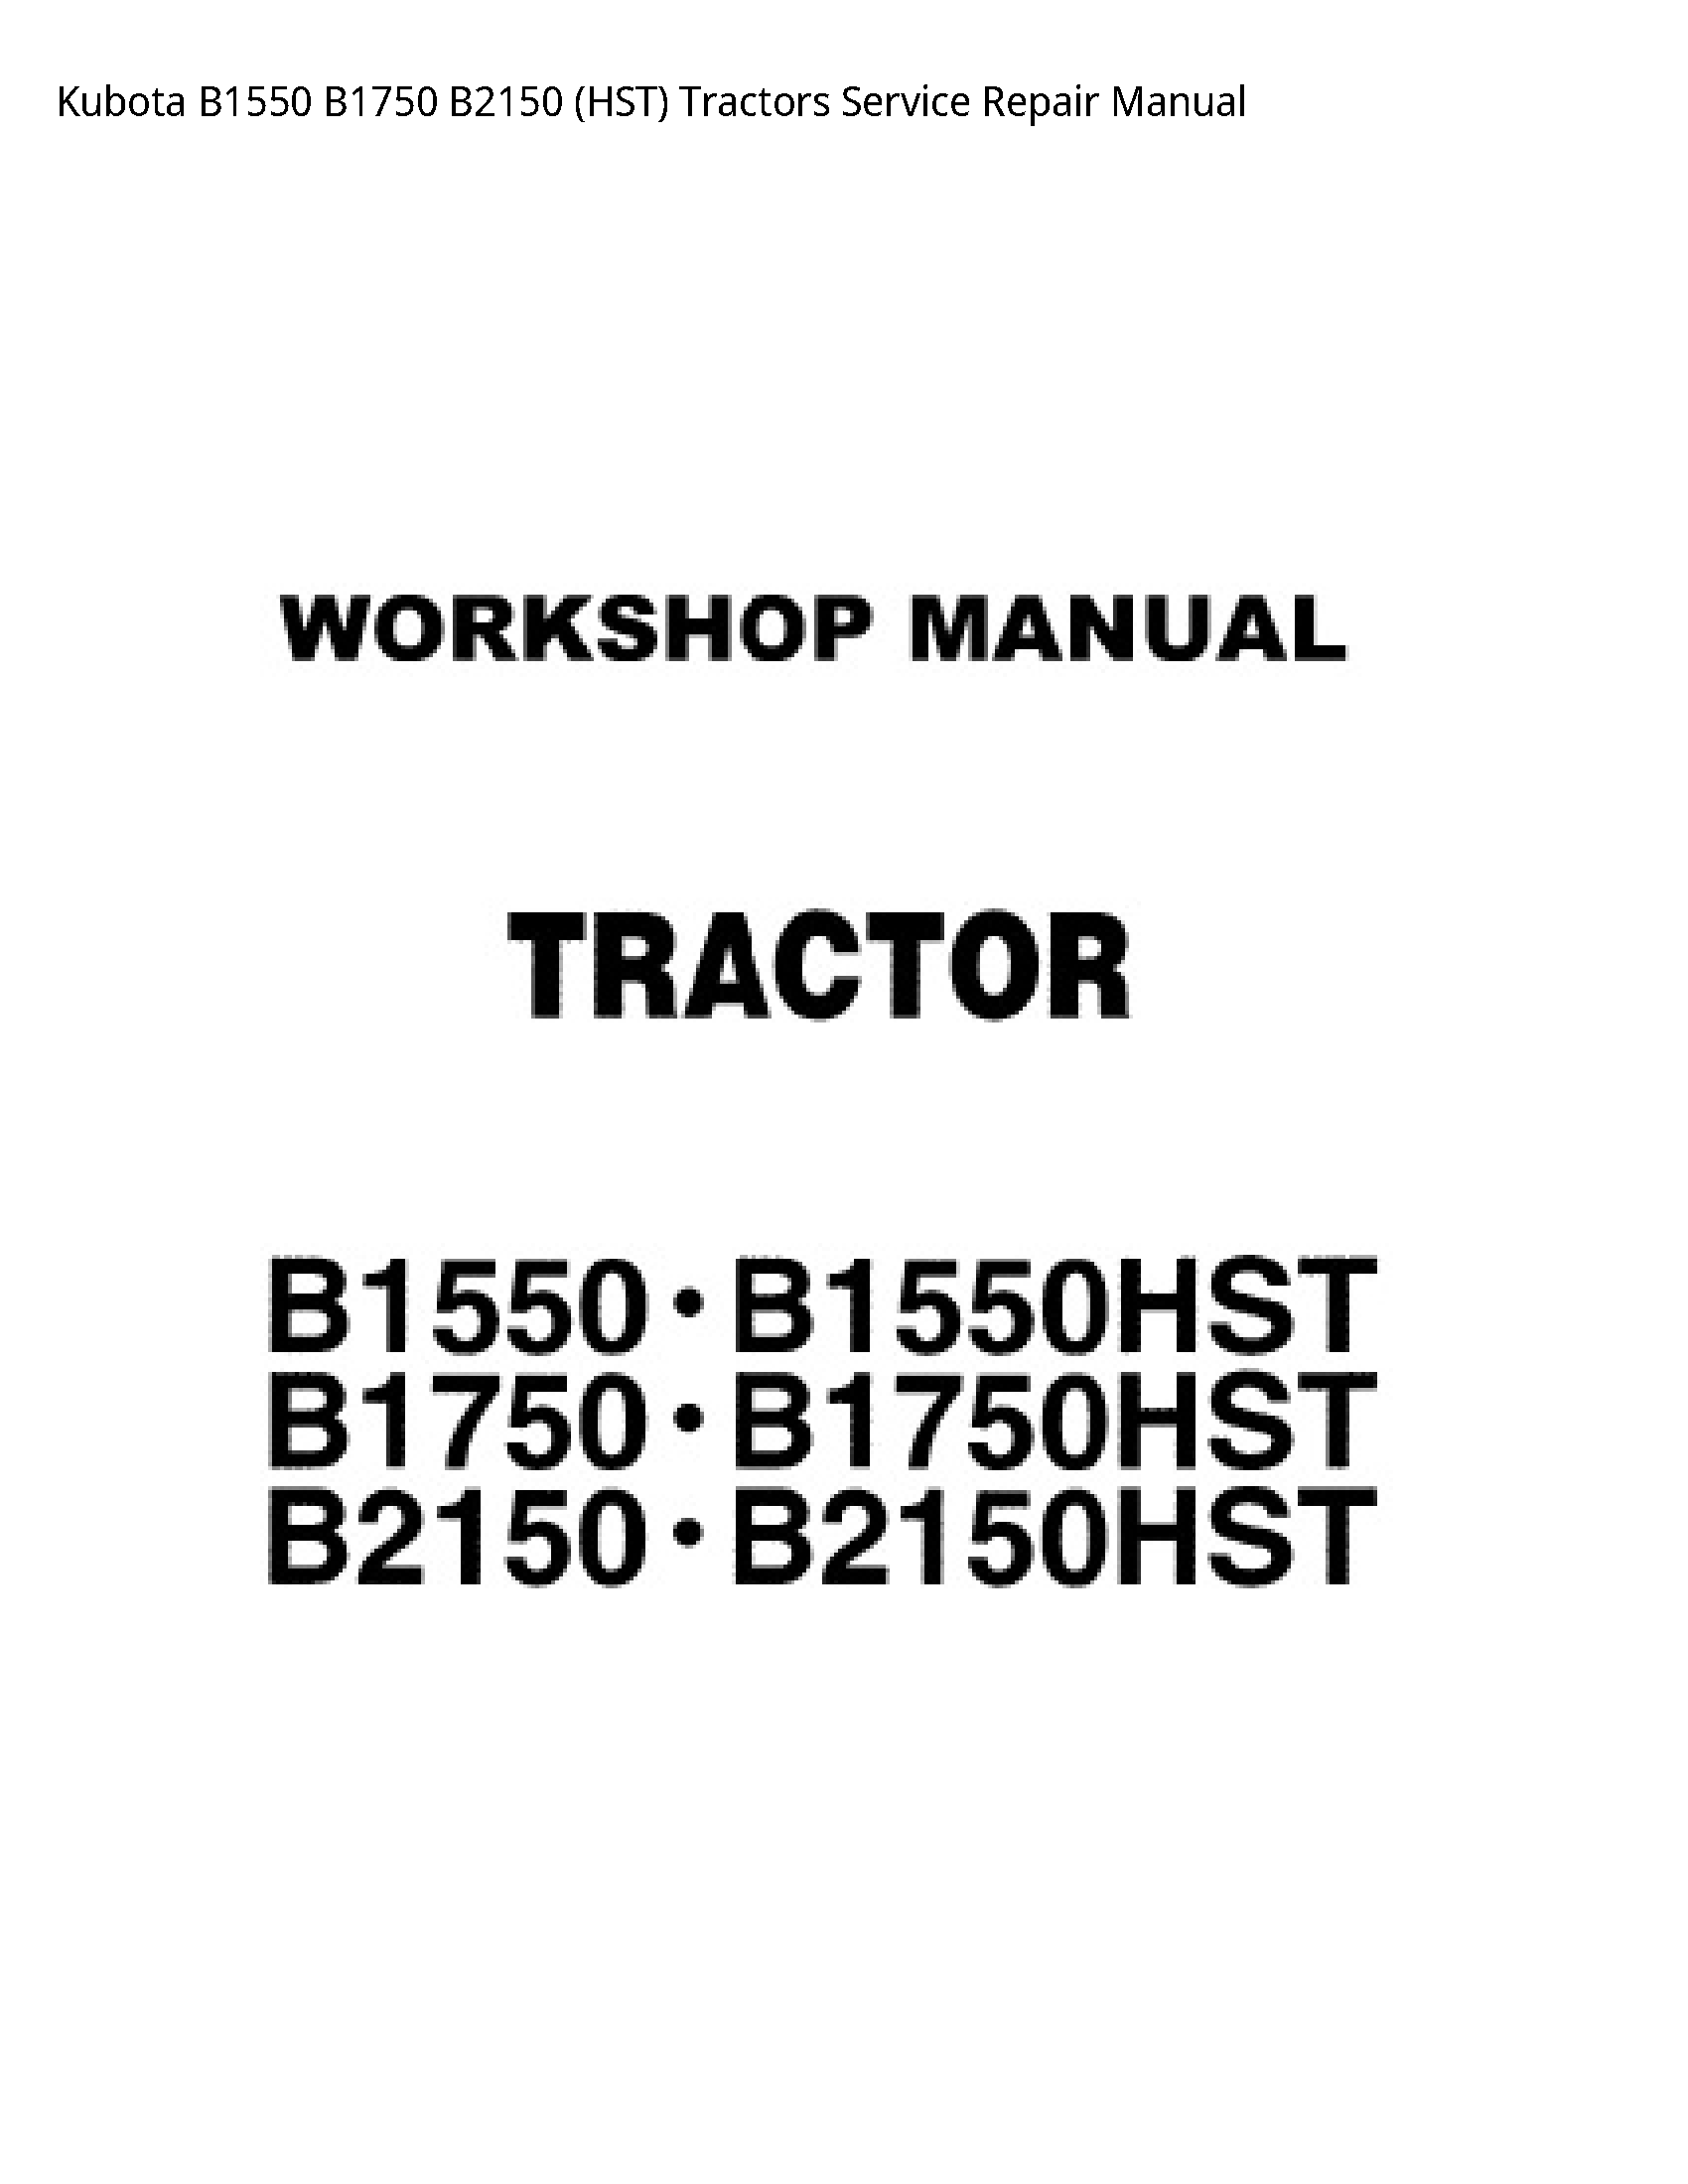 Kubota B1550 HST Tractors manual